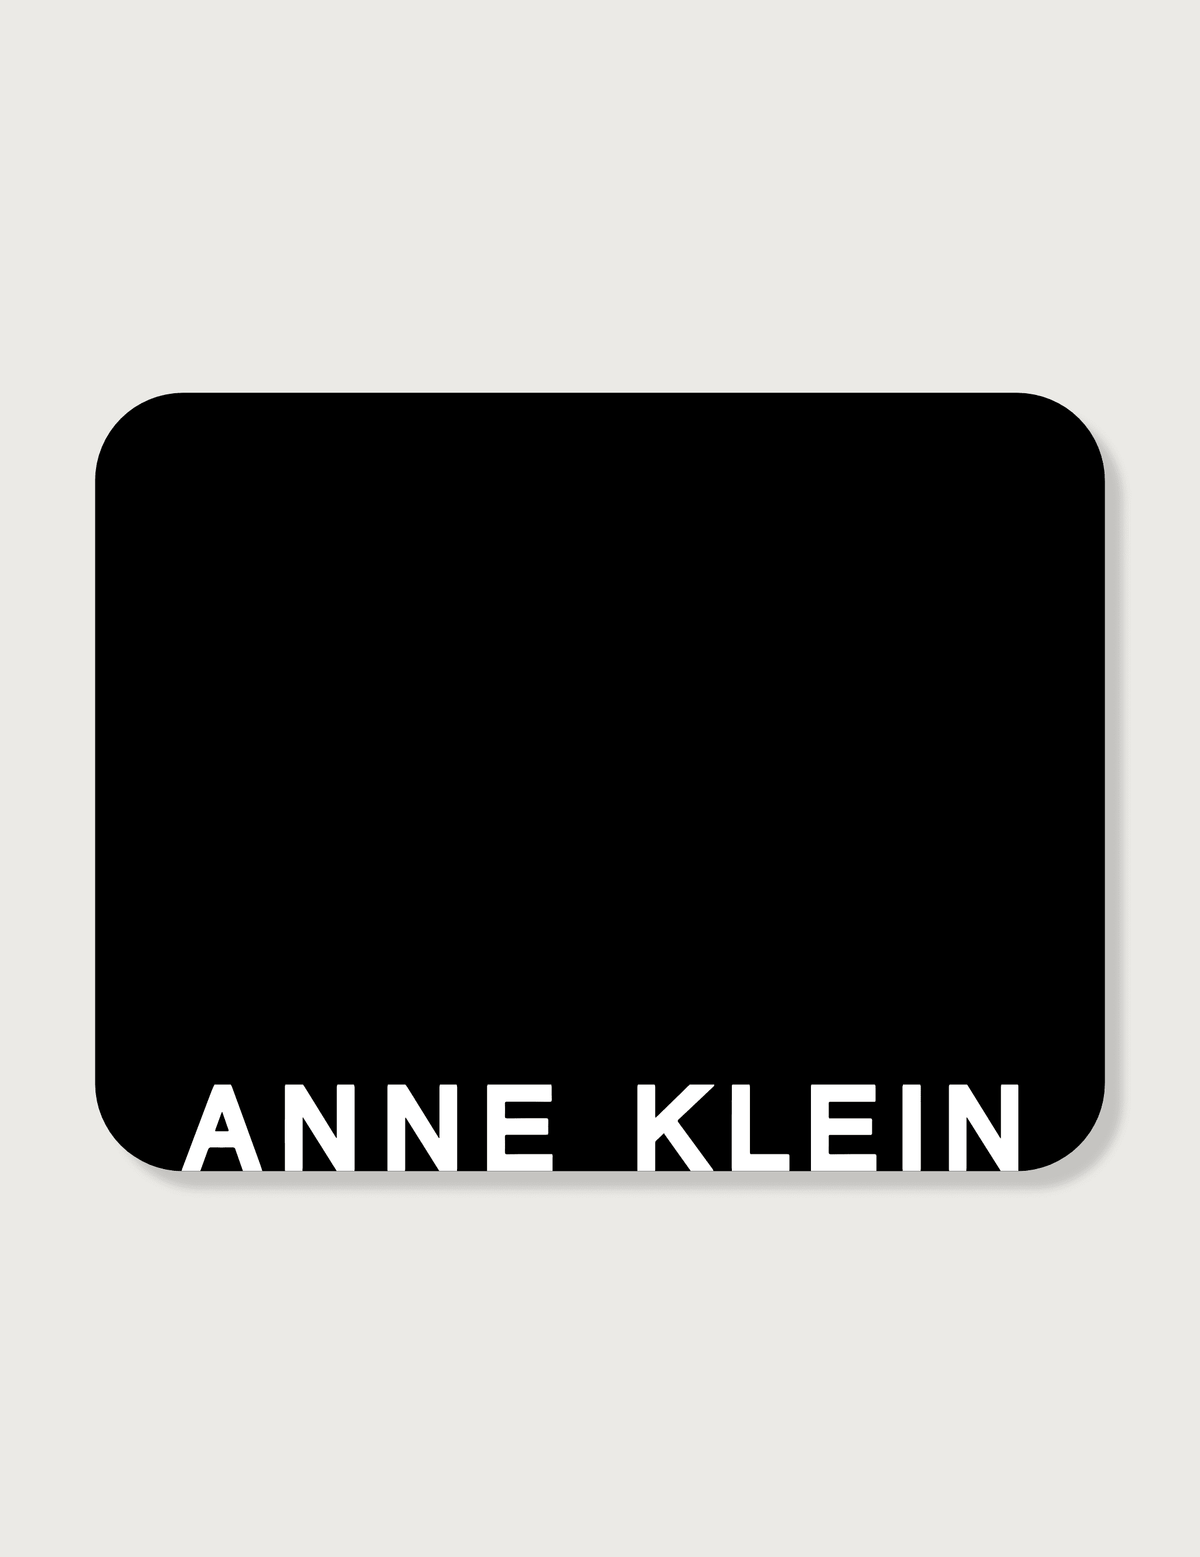 Anne Klein $25.00 Anne Klein E-Gift Card